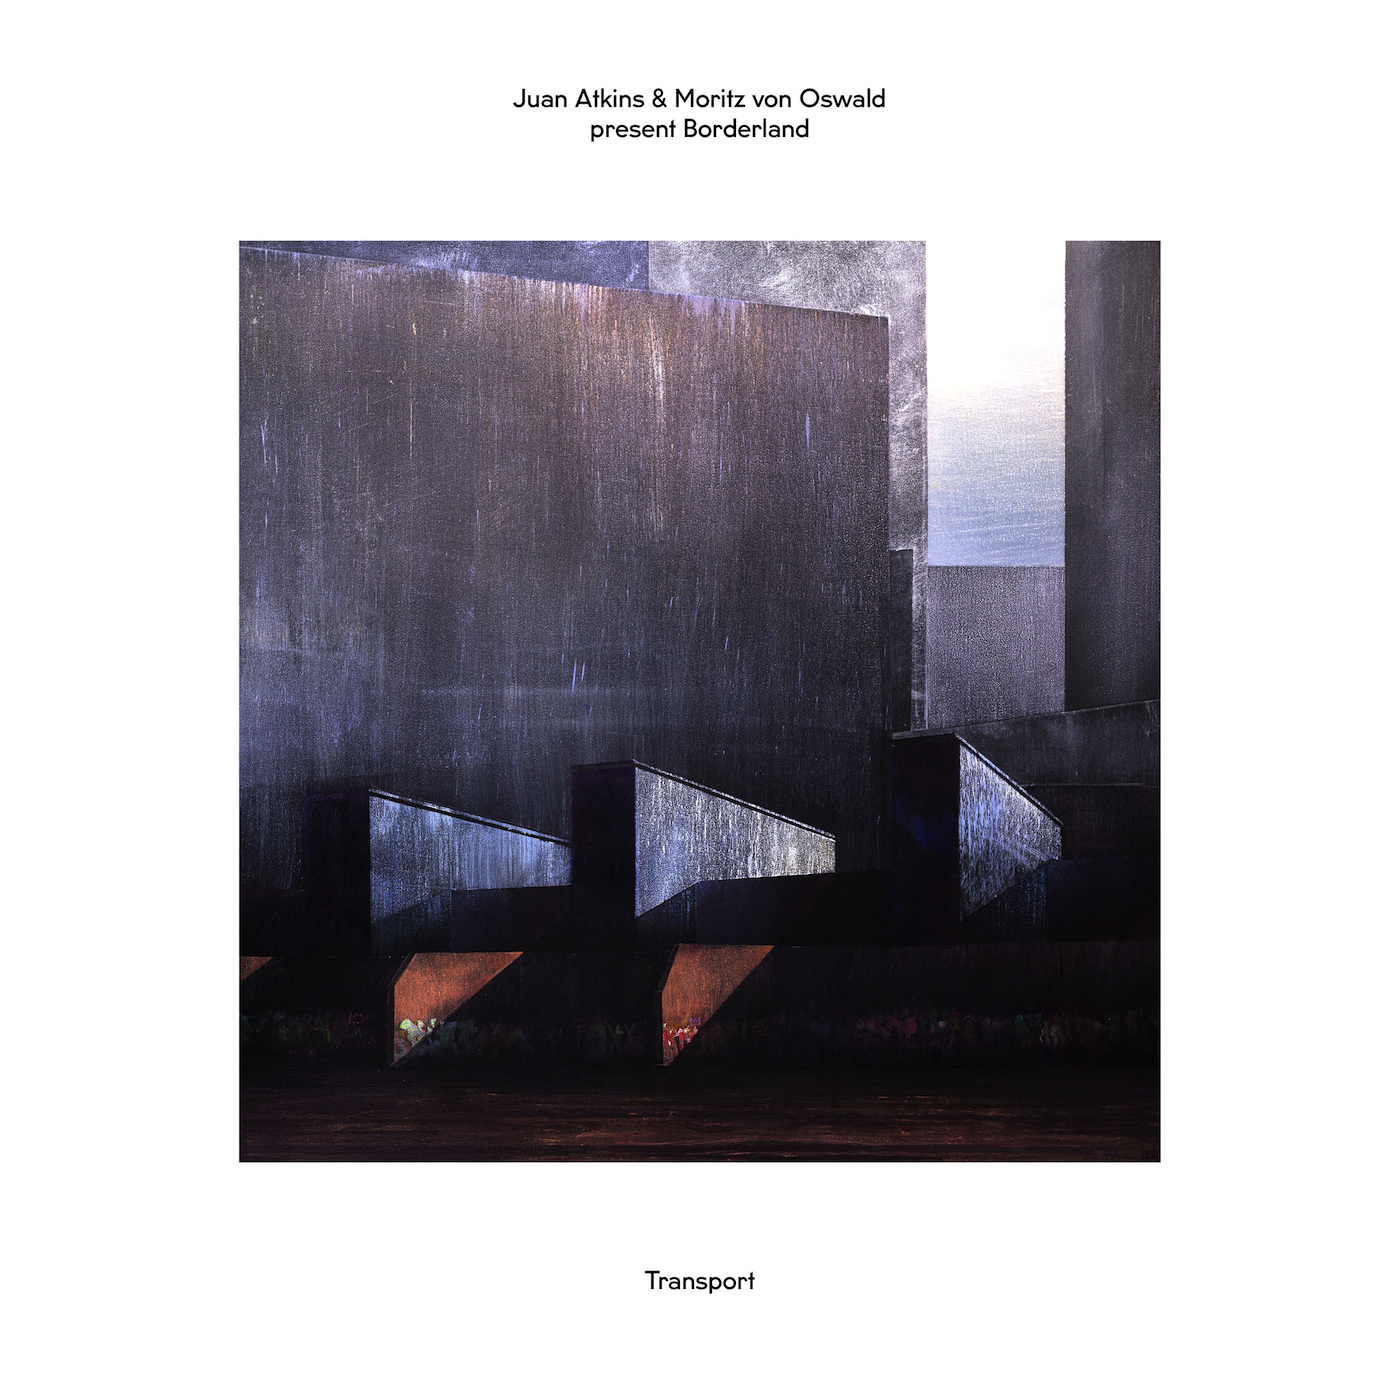 Juan Atkins & Moritz von Oswald – Borderland: Transport